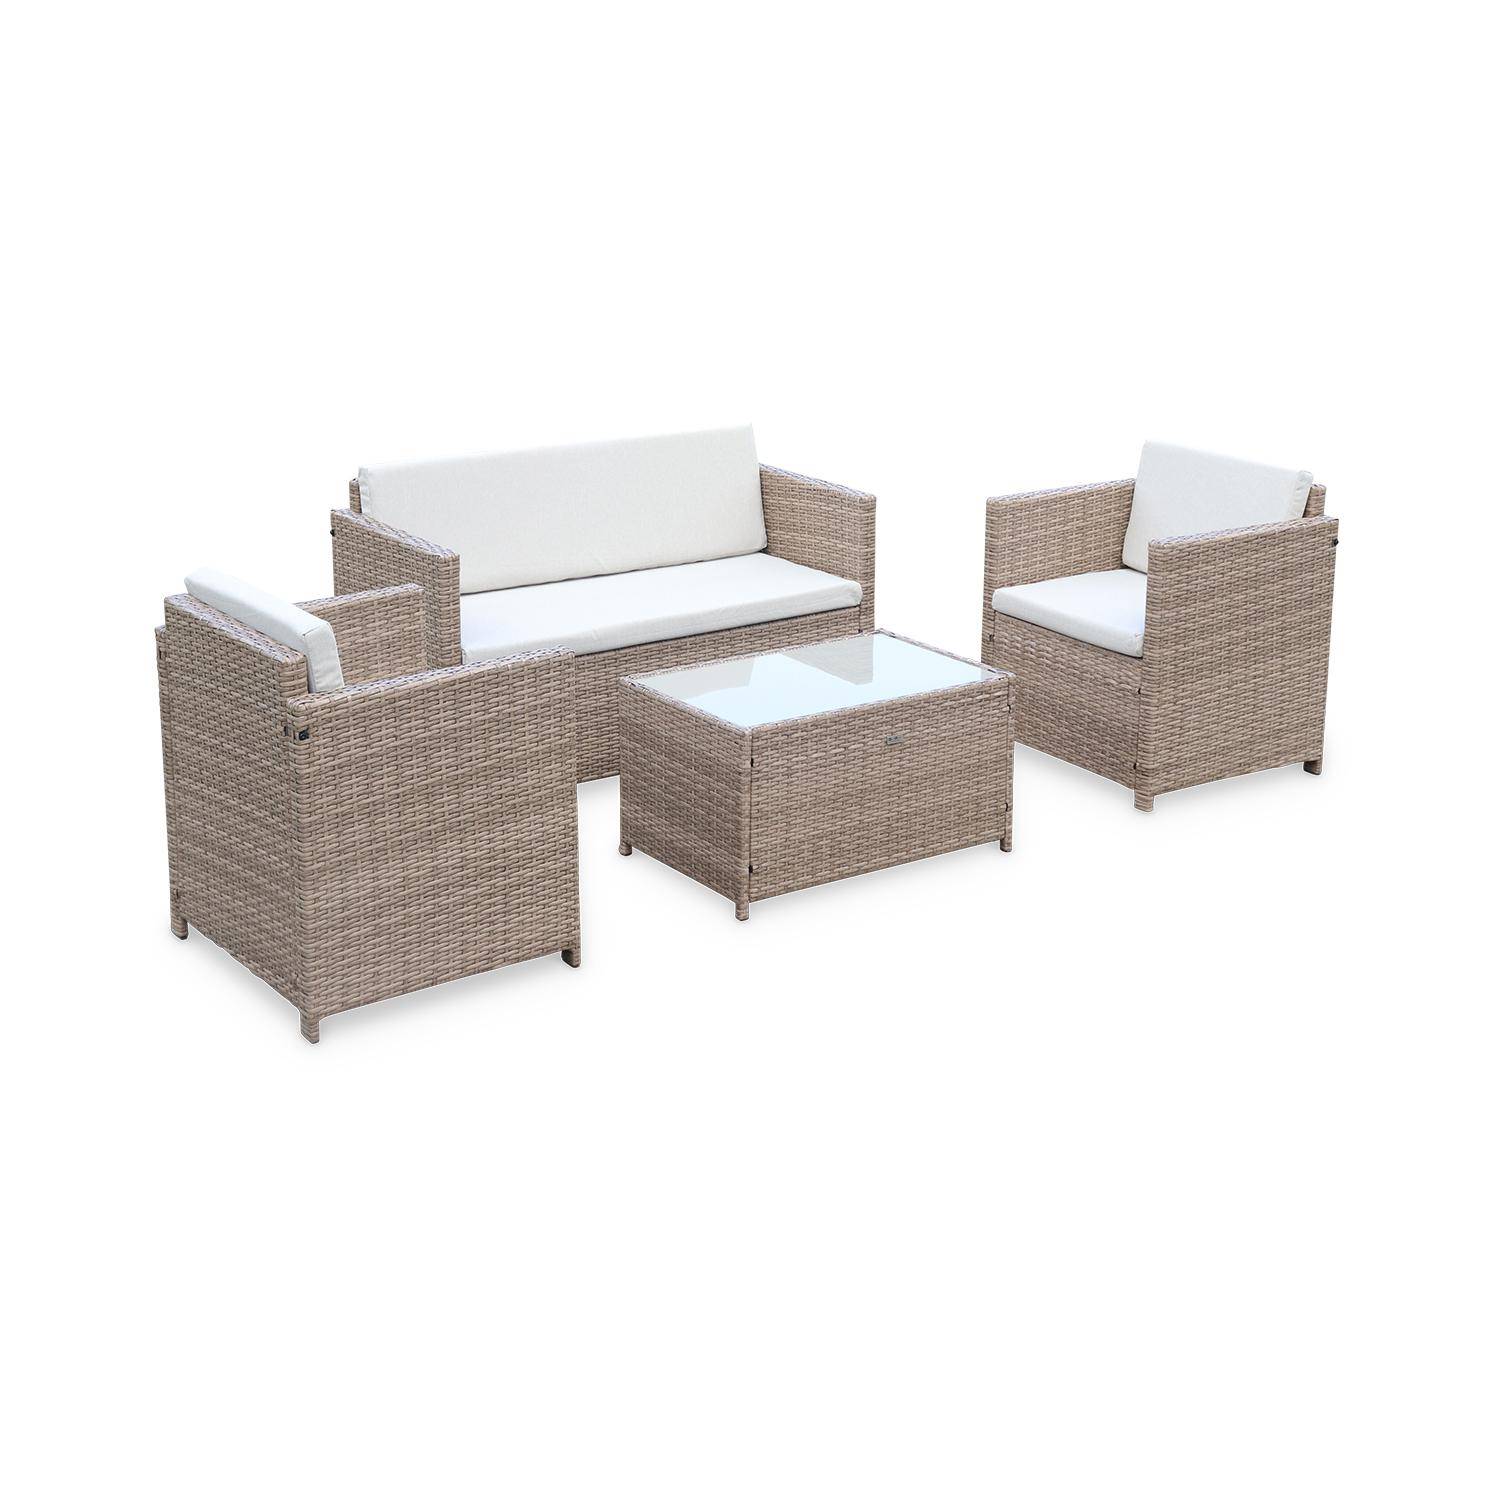 4-seater polyrattan garden sofa set - sofa, 2 armchairs, coffee table - Perugia - Natural Beige rattan, Beige cushions,sweeek,Photo3